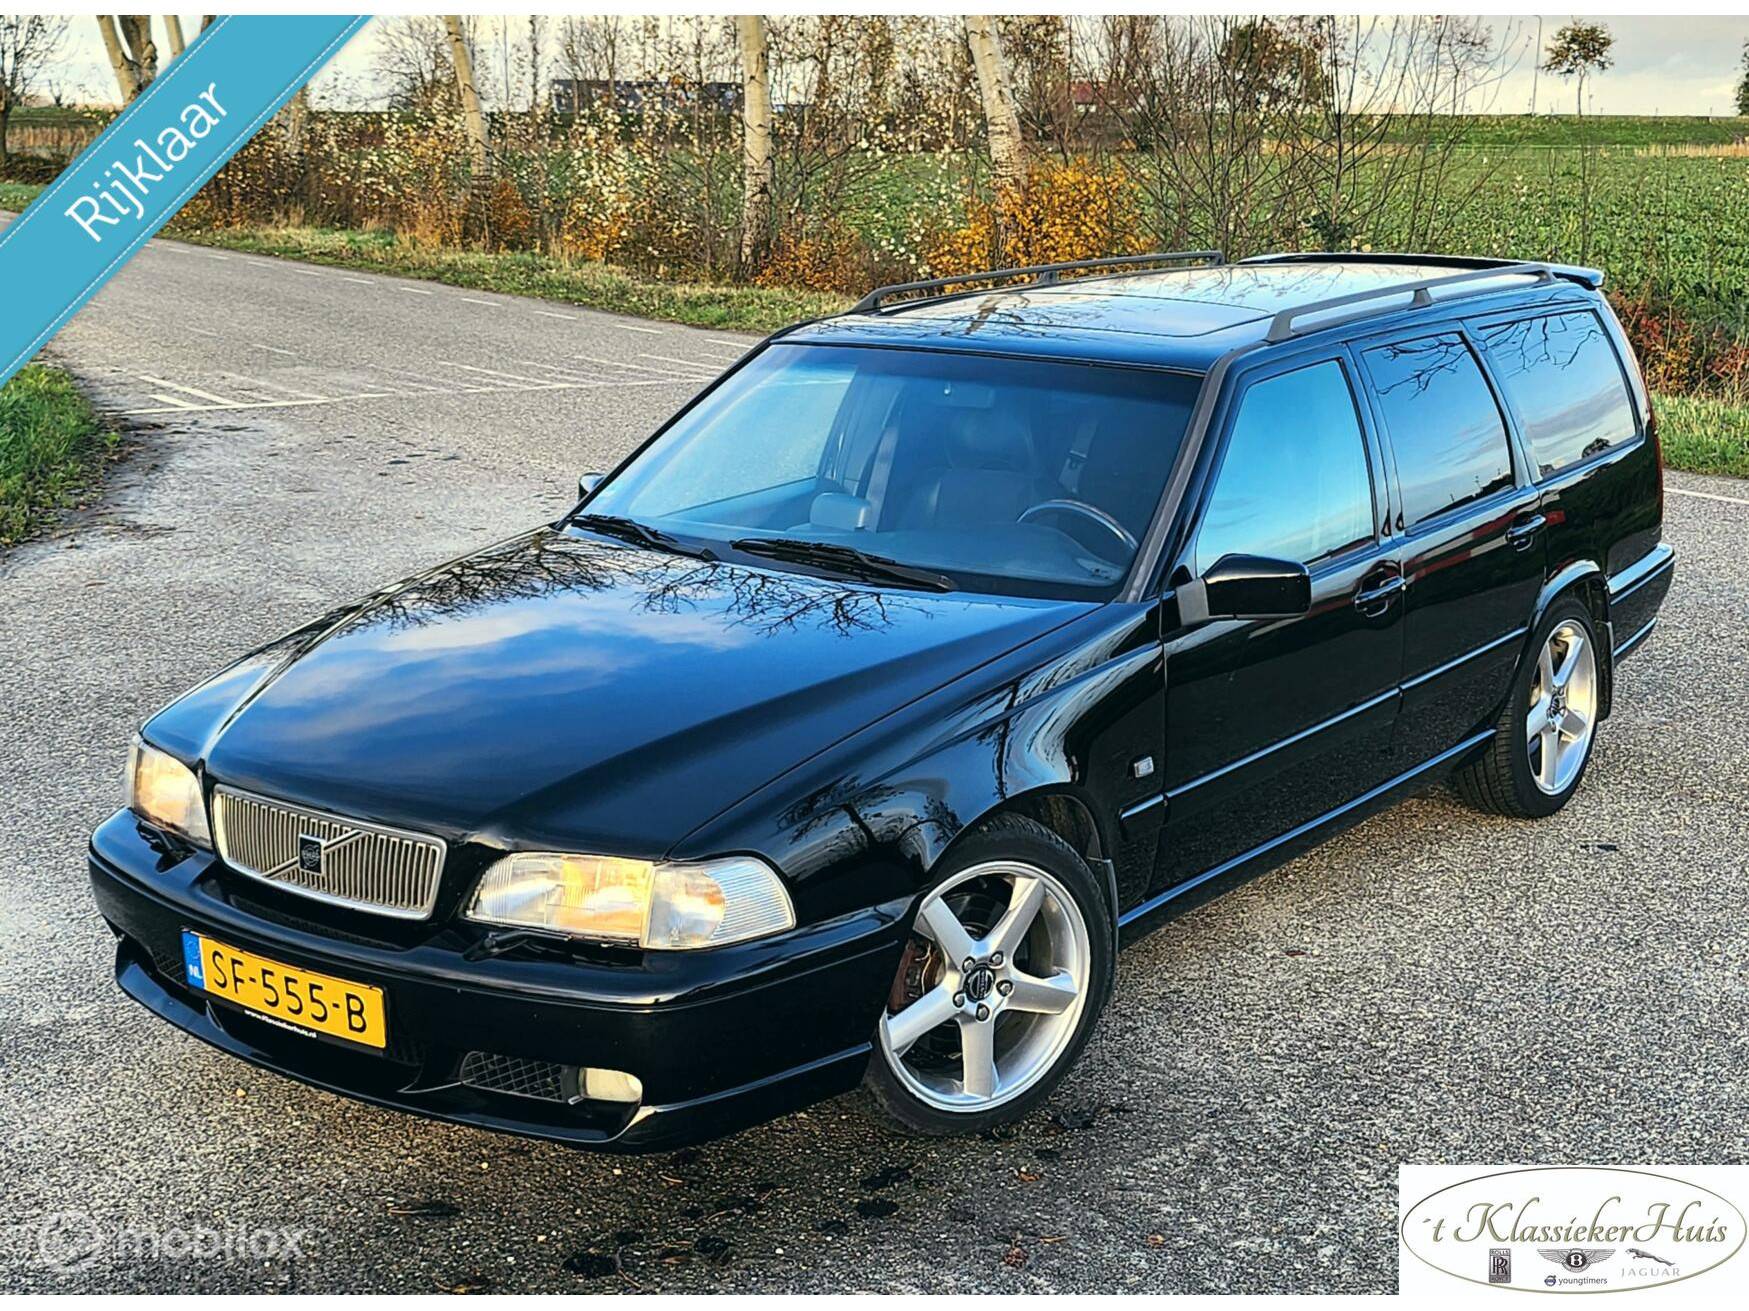 For Sale: Volvo V70 R (1998) offered for €9,450